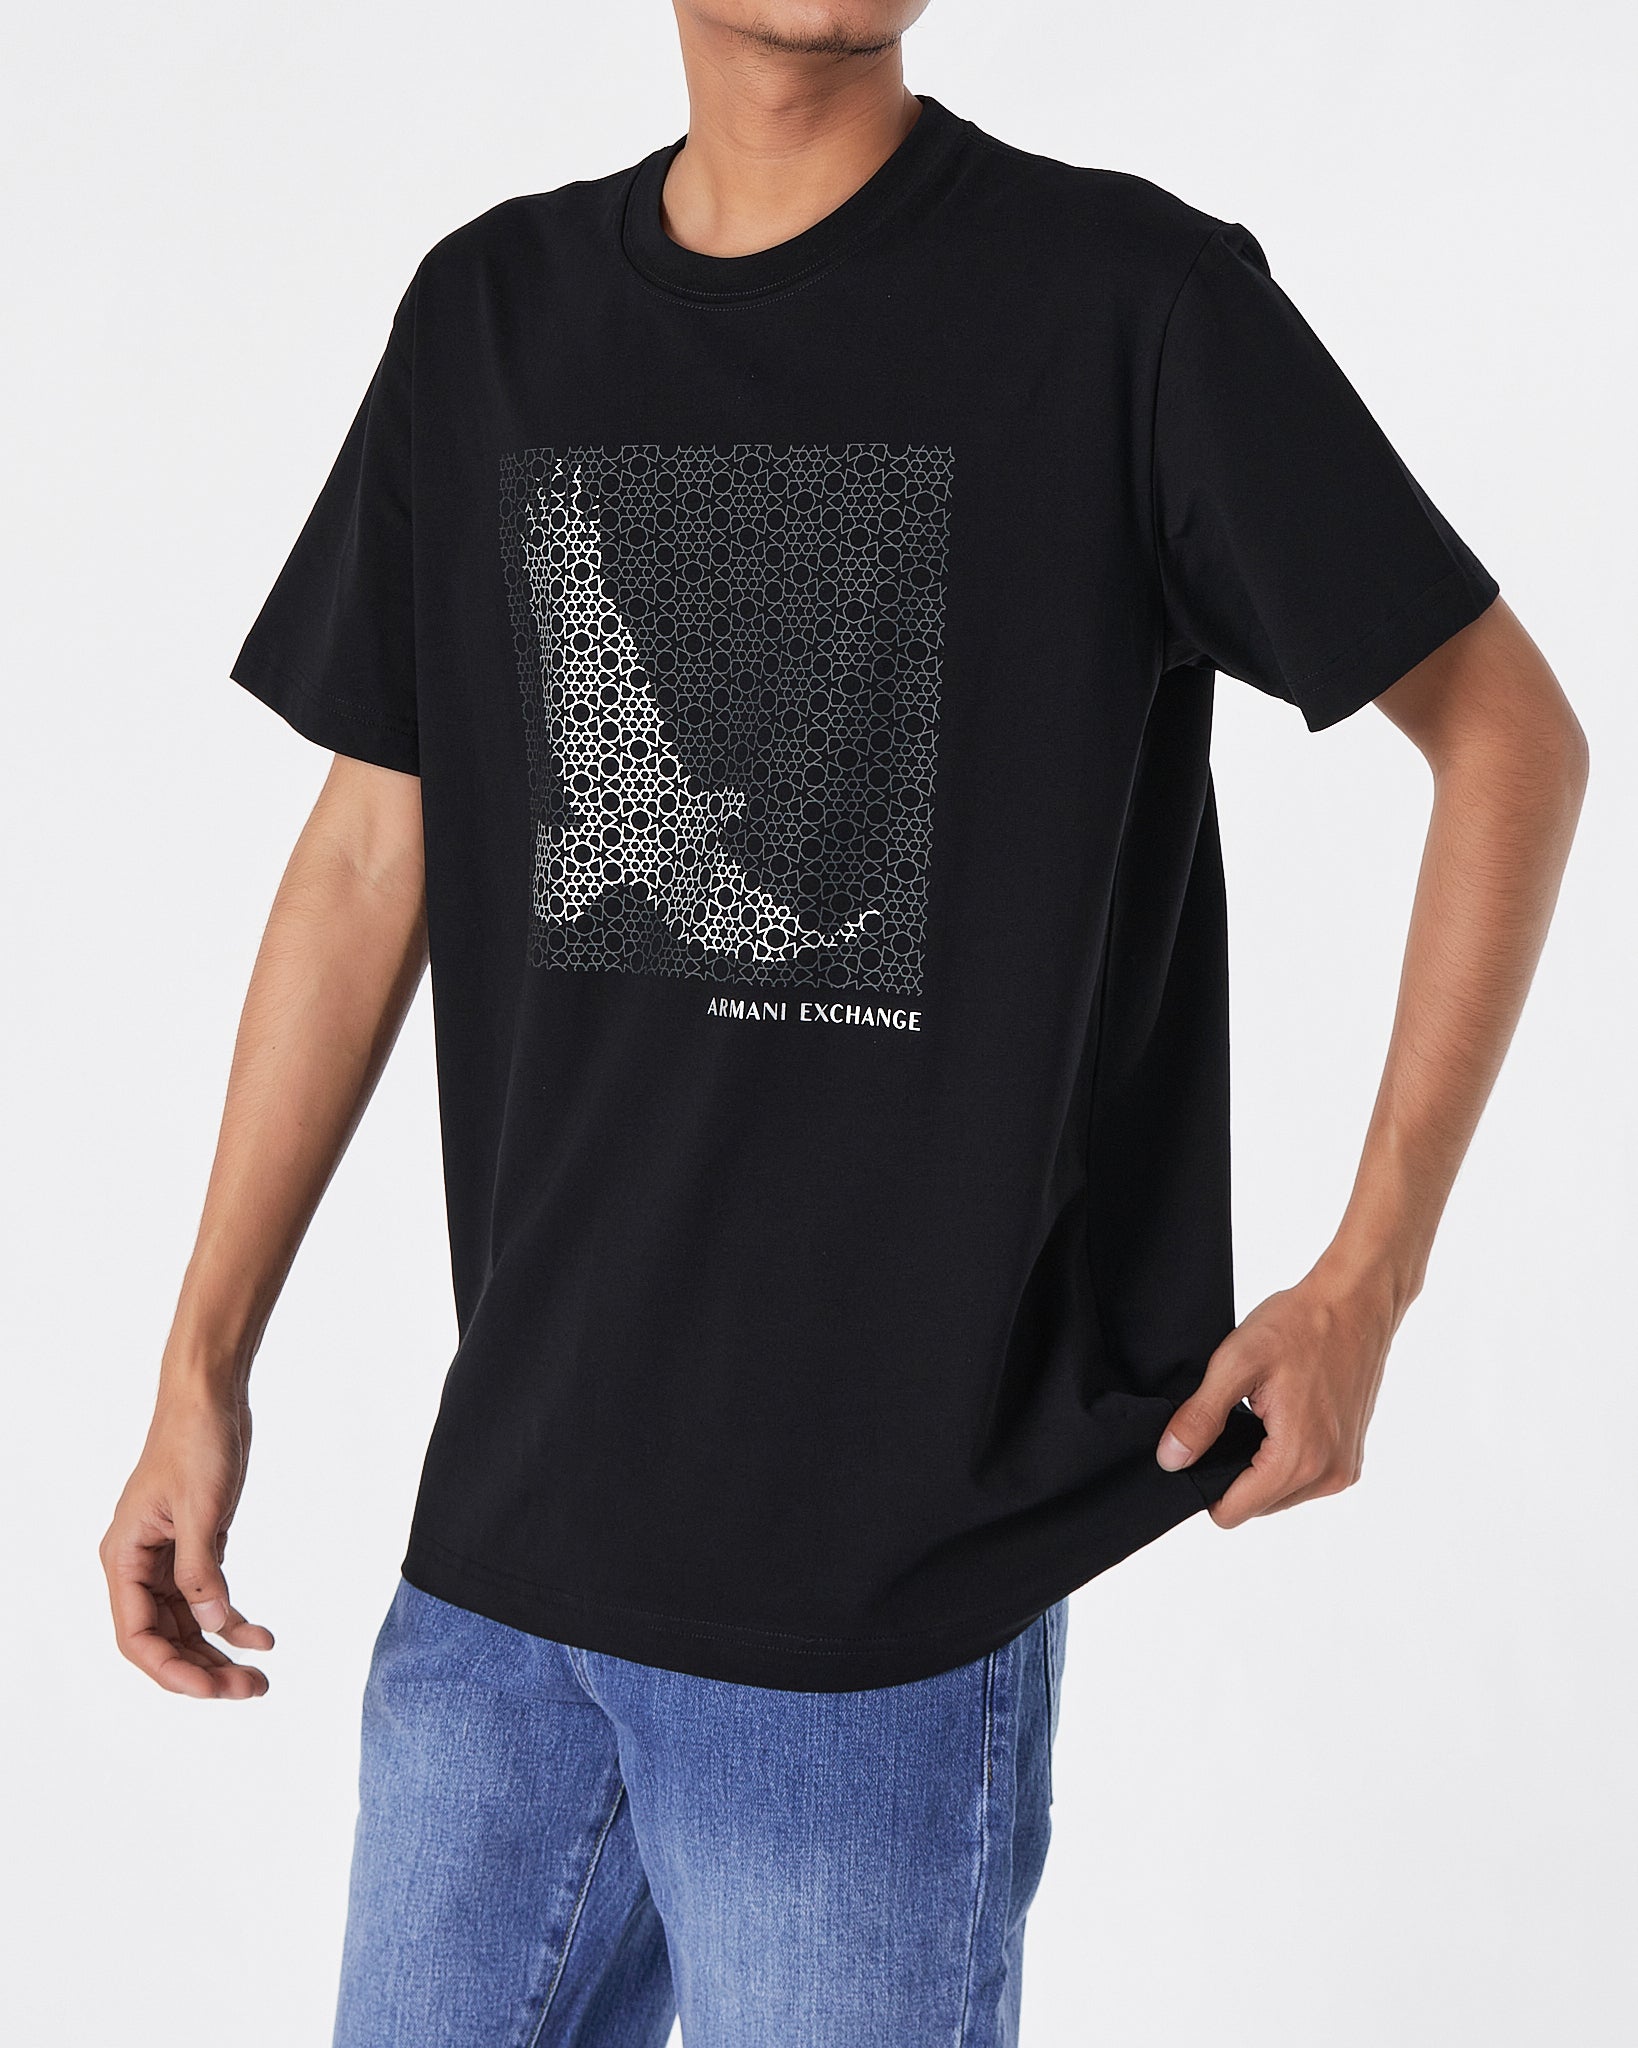 ARM Bird Printed Men Black T-Shirt 17.90